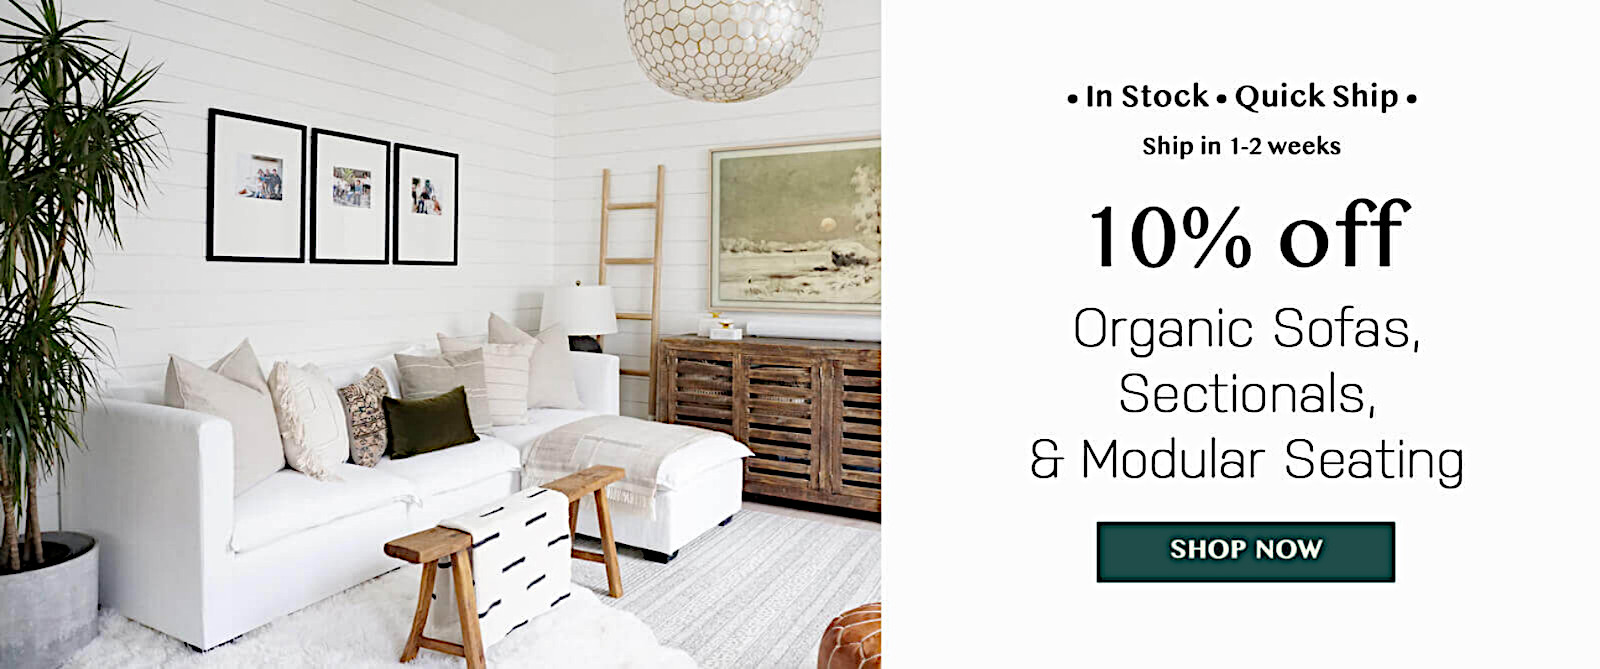 organic sofas sectionals modular seating good value